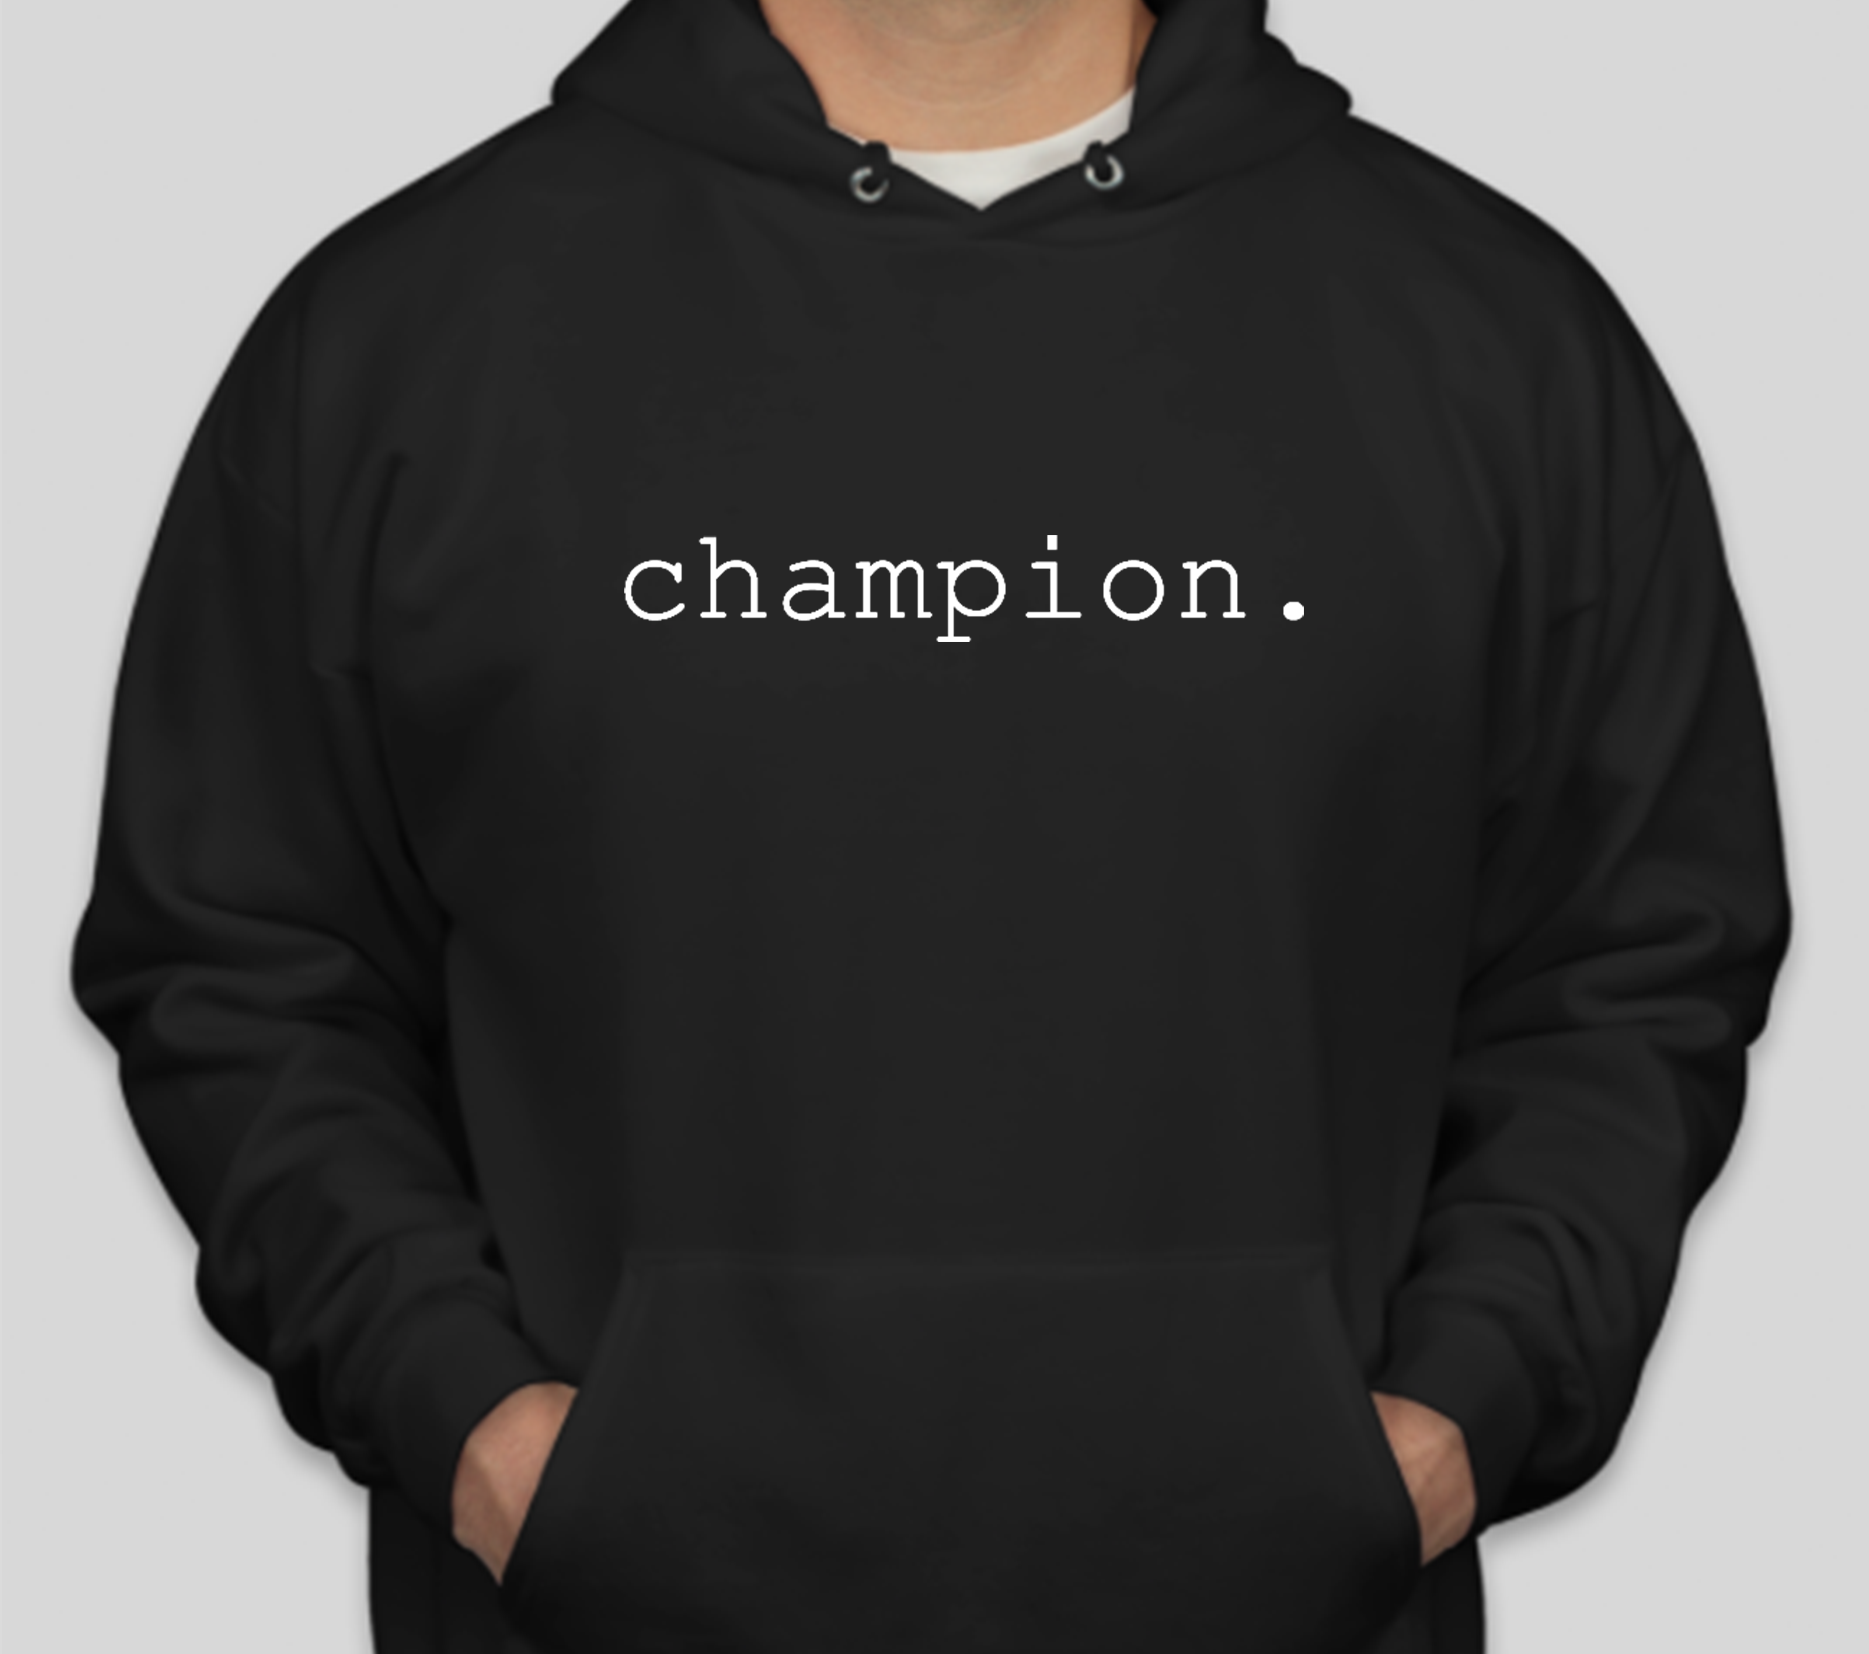 champion hoodies me